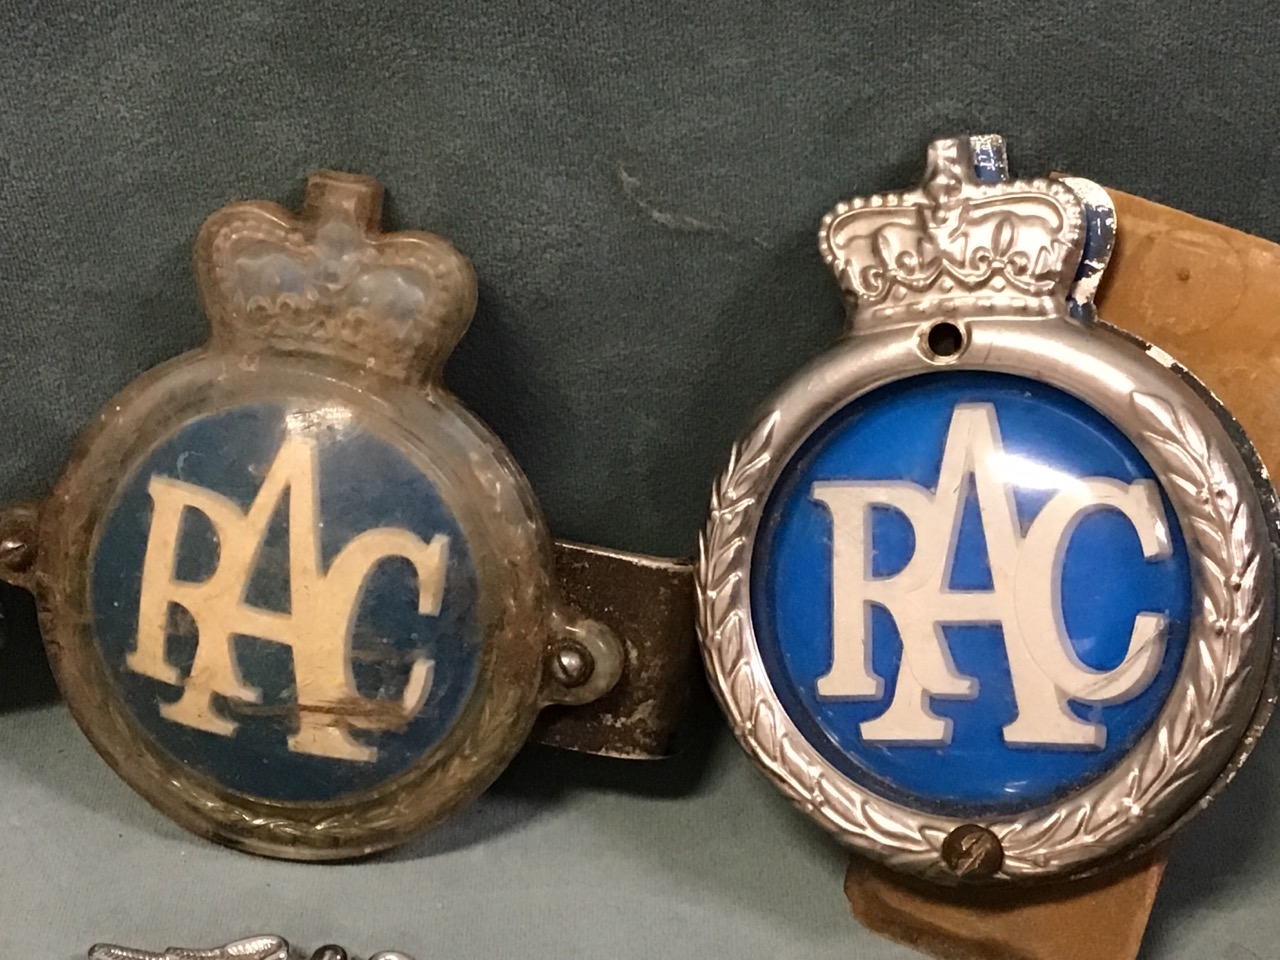 Fourteen chromed AA badges; two RAC chromed badges; and a chromed badged bar - Peveril Motor Club, - Image 2 of 3